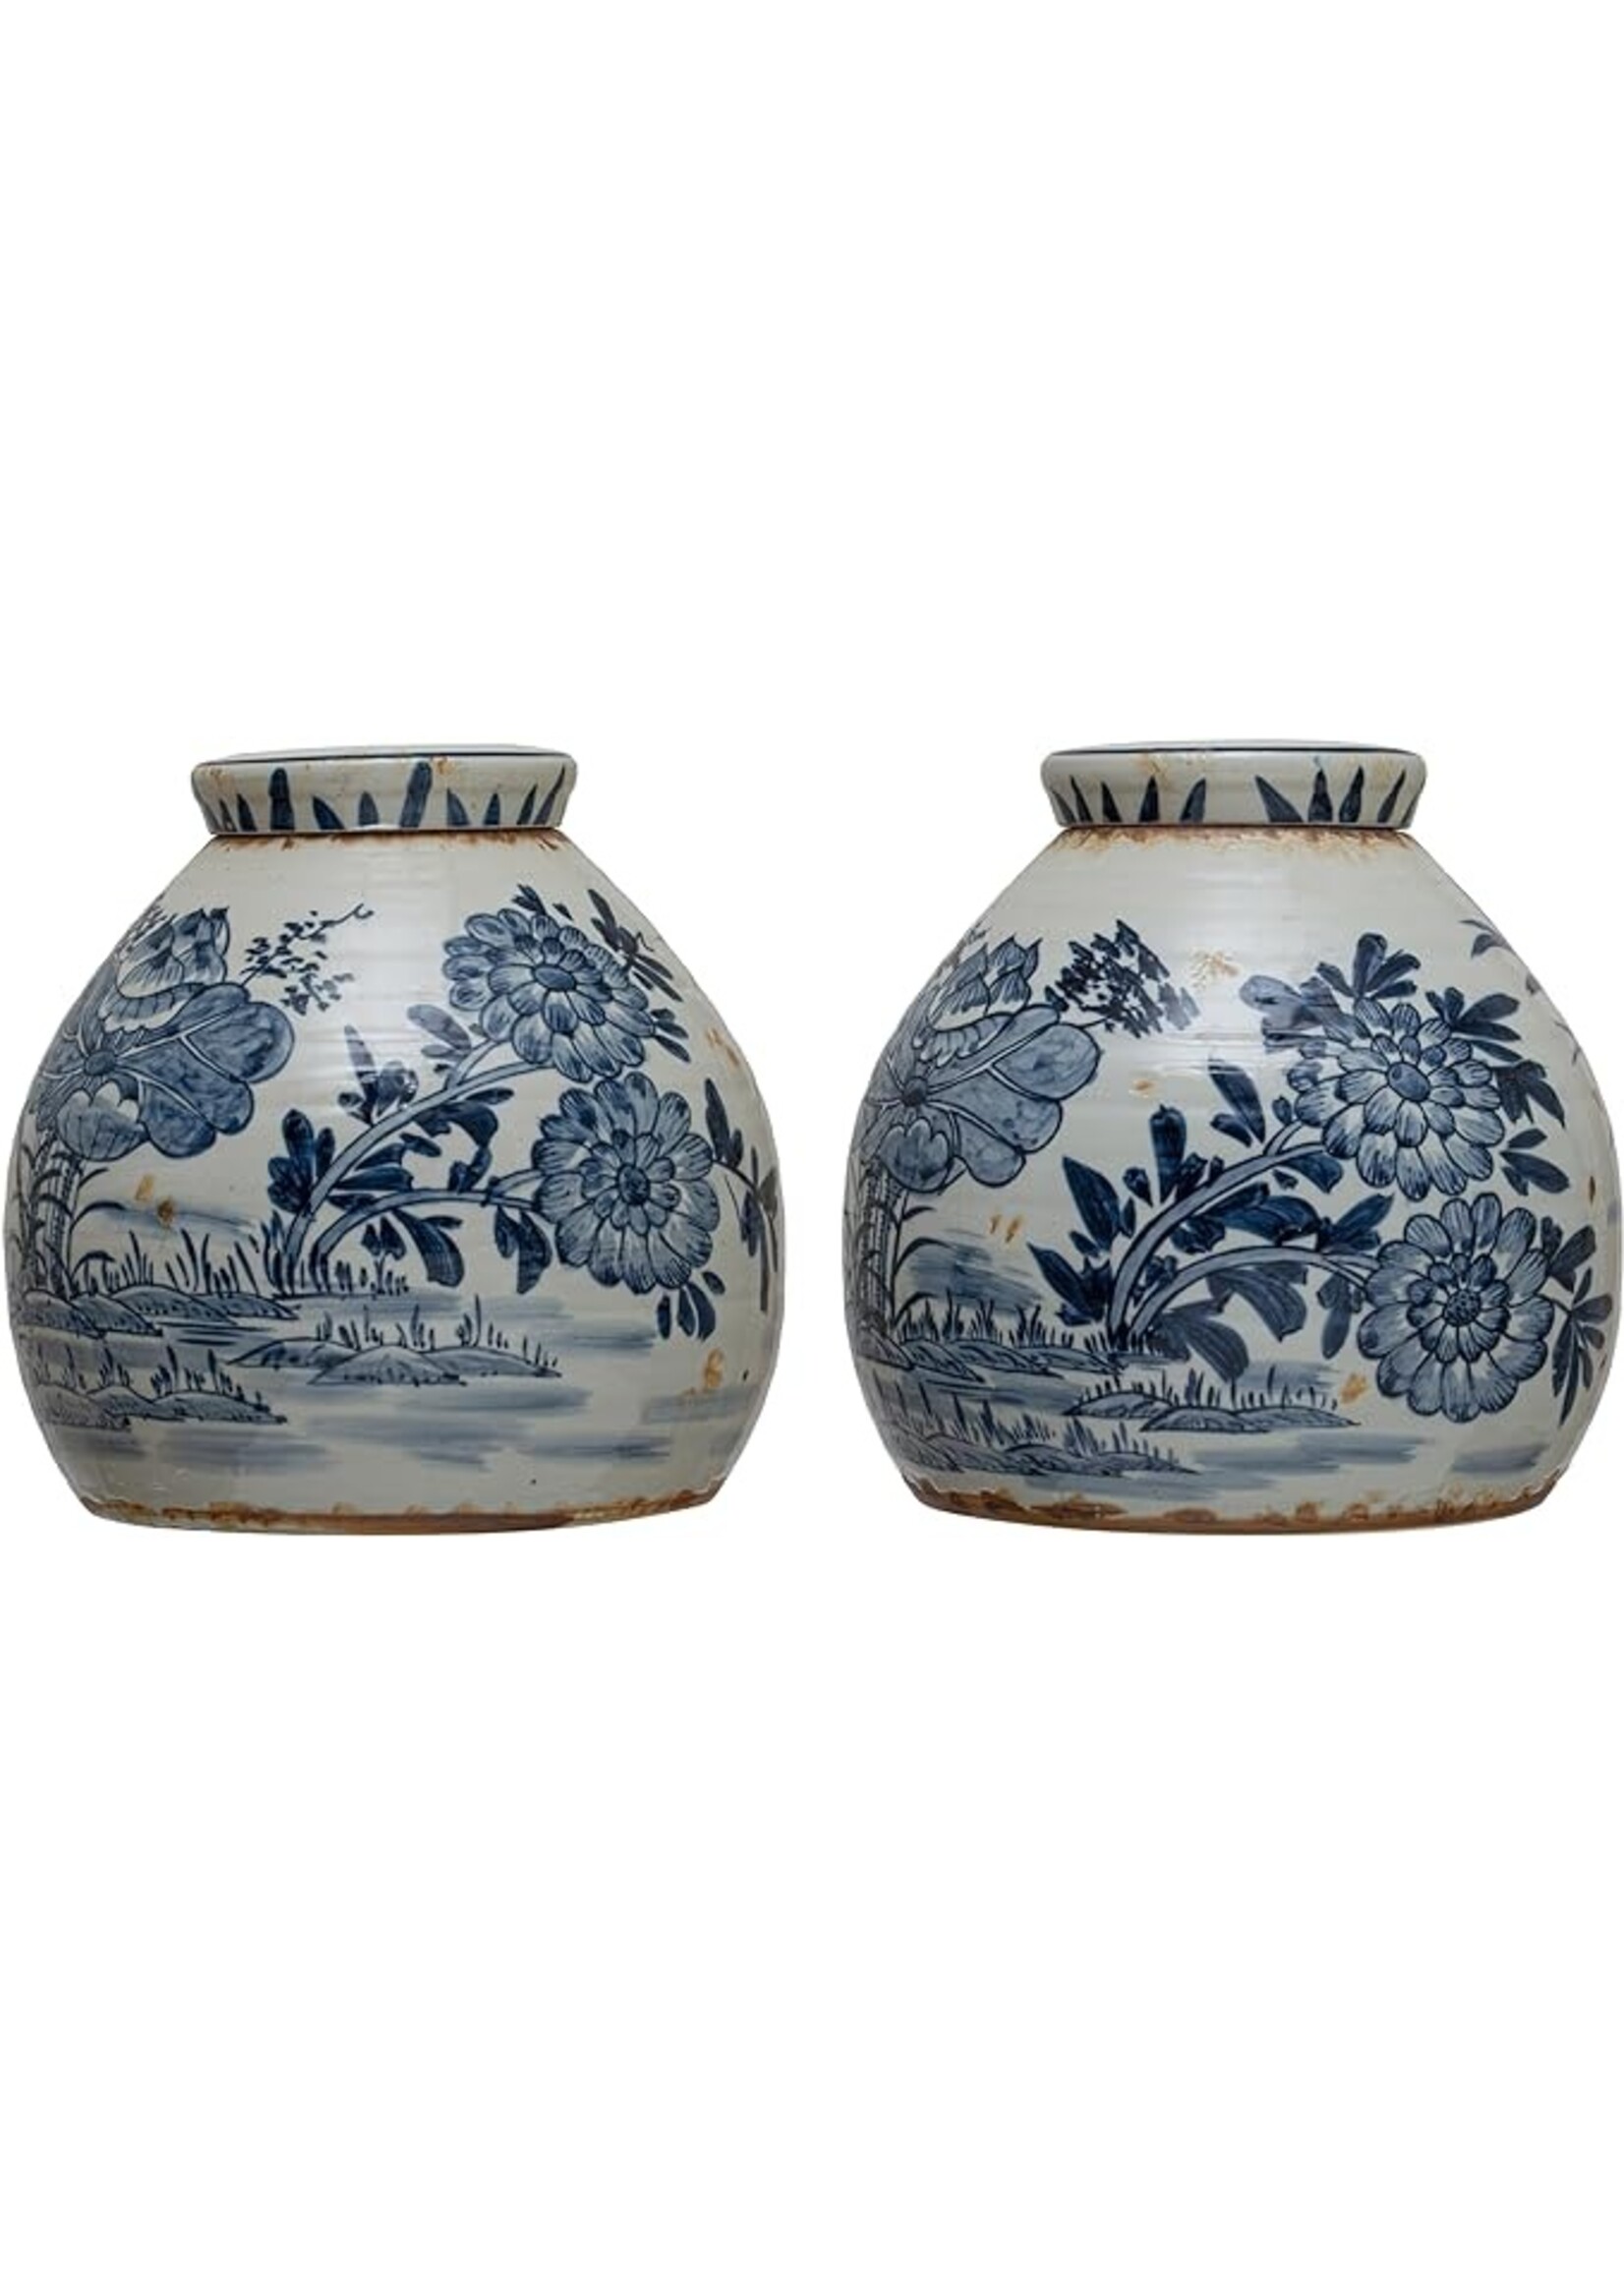 Decorative Stoneware Ginger Jar - Distressed Blue & White